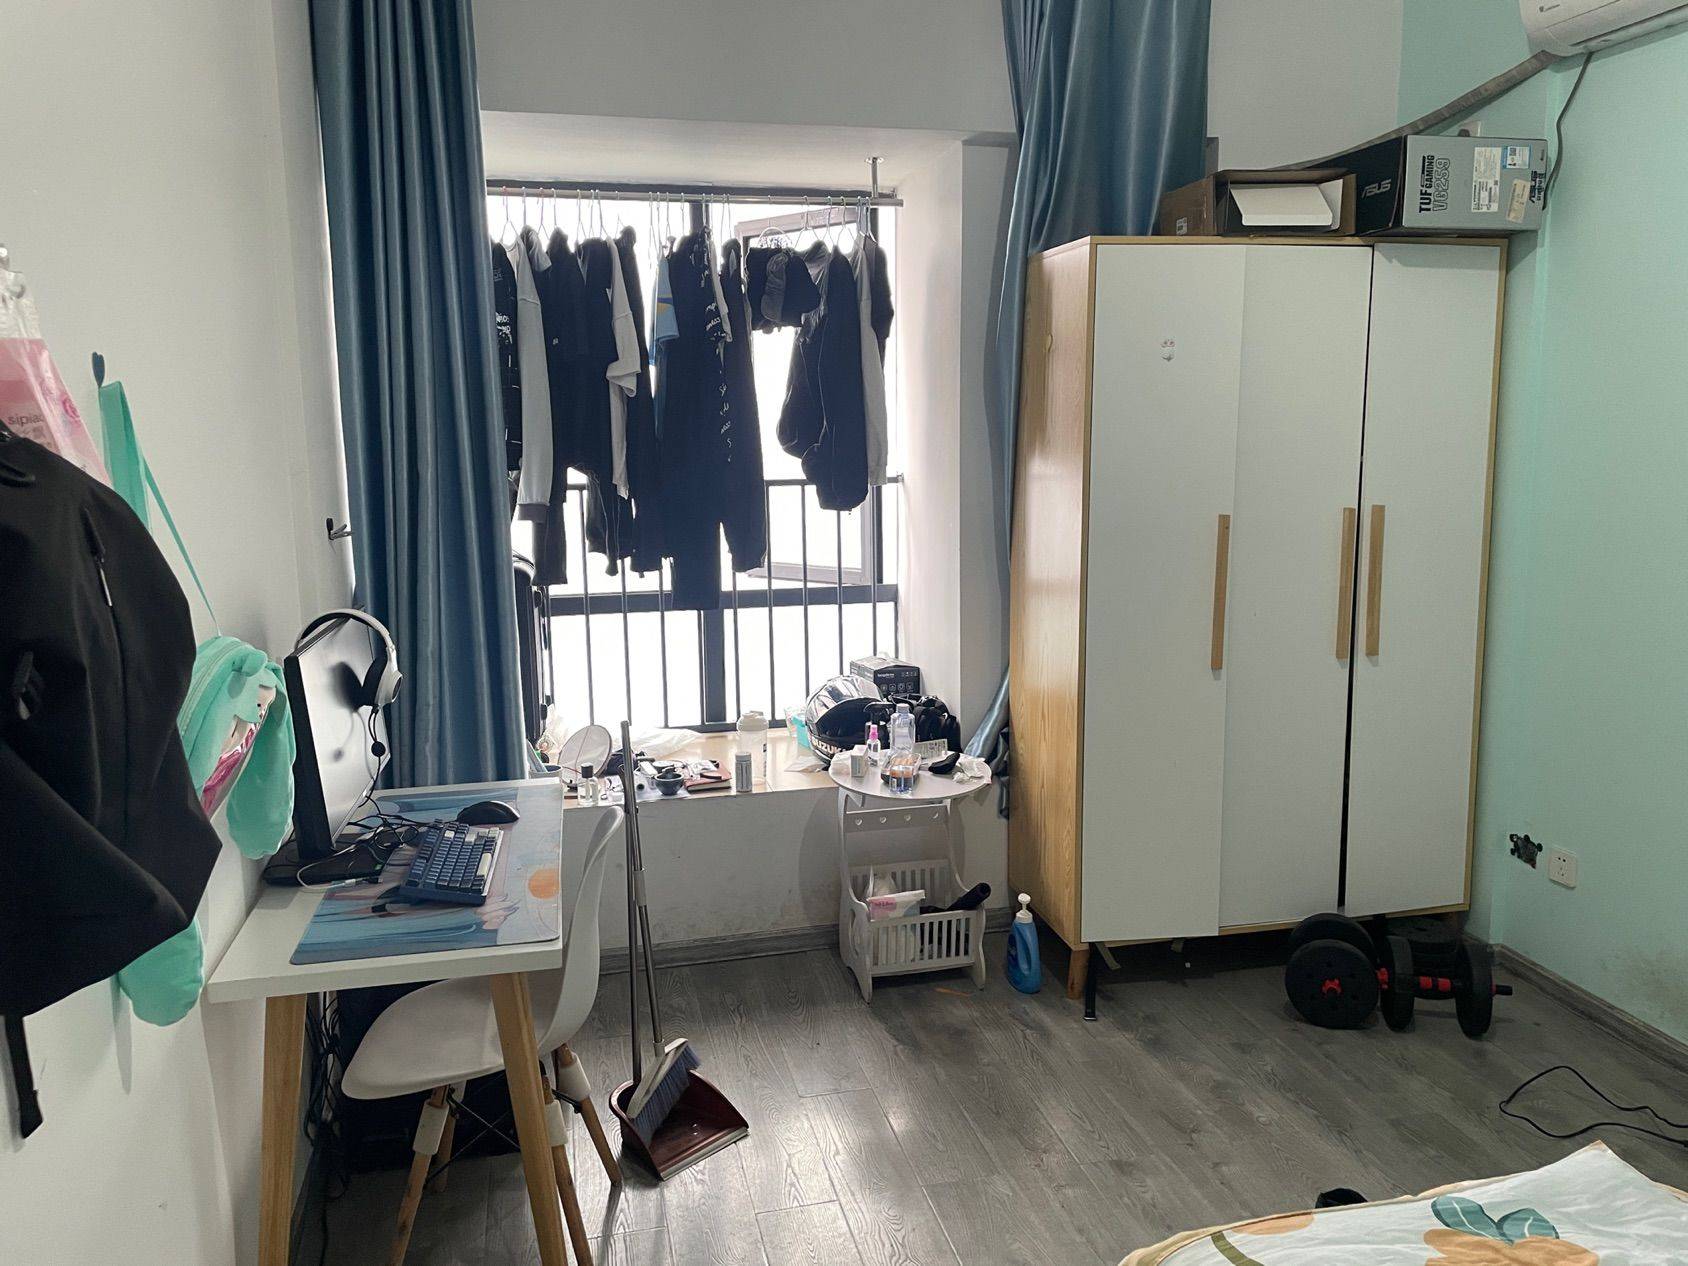 Changsha-Yuelu-Cozy Home,Clean&Comfy,No Gender Limit